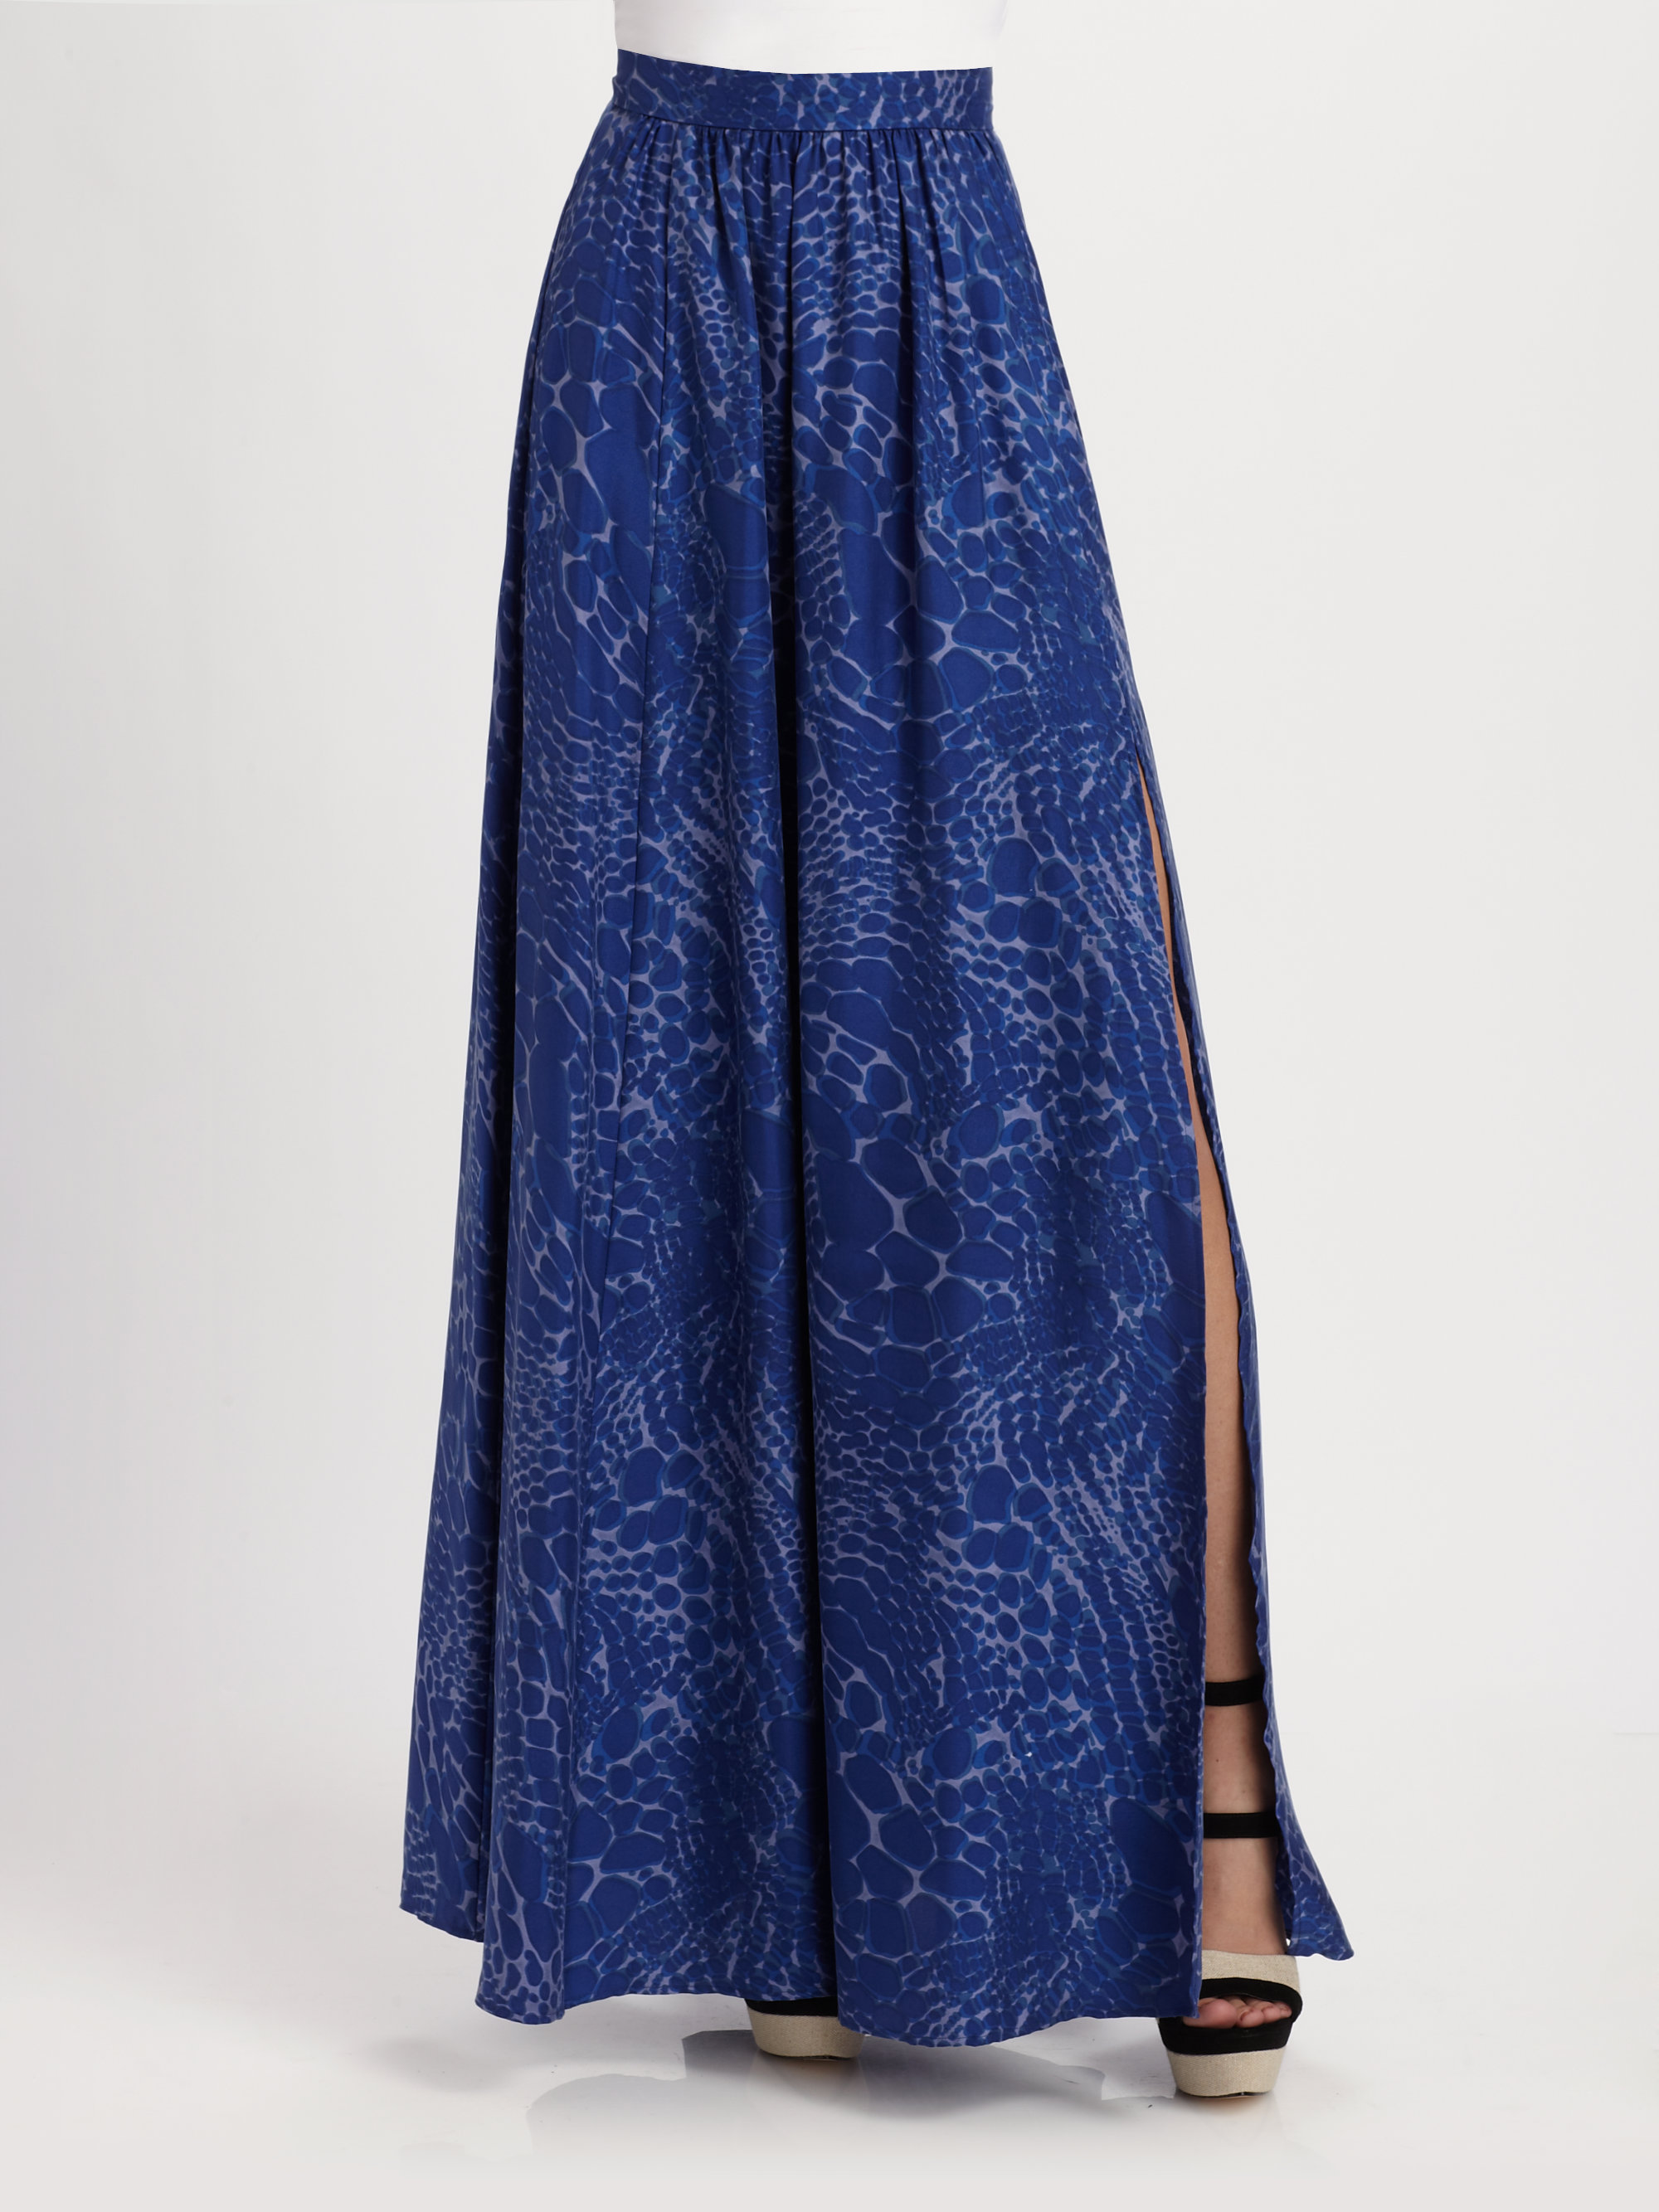 Lyst - Rachel Zoe Vanessa Maxi Skirt in Blue